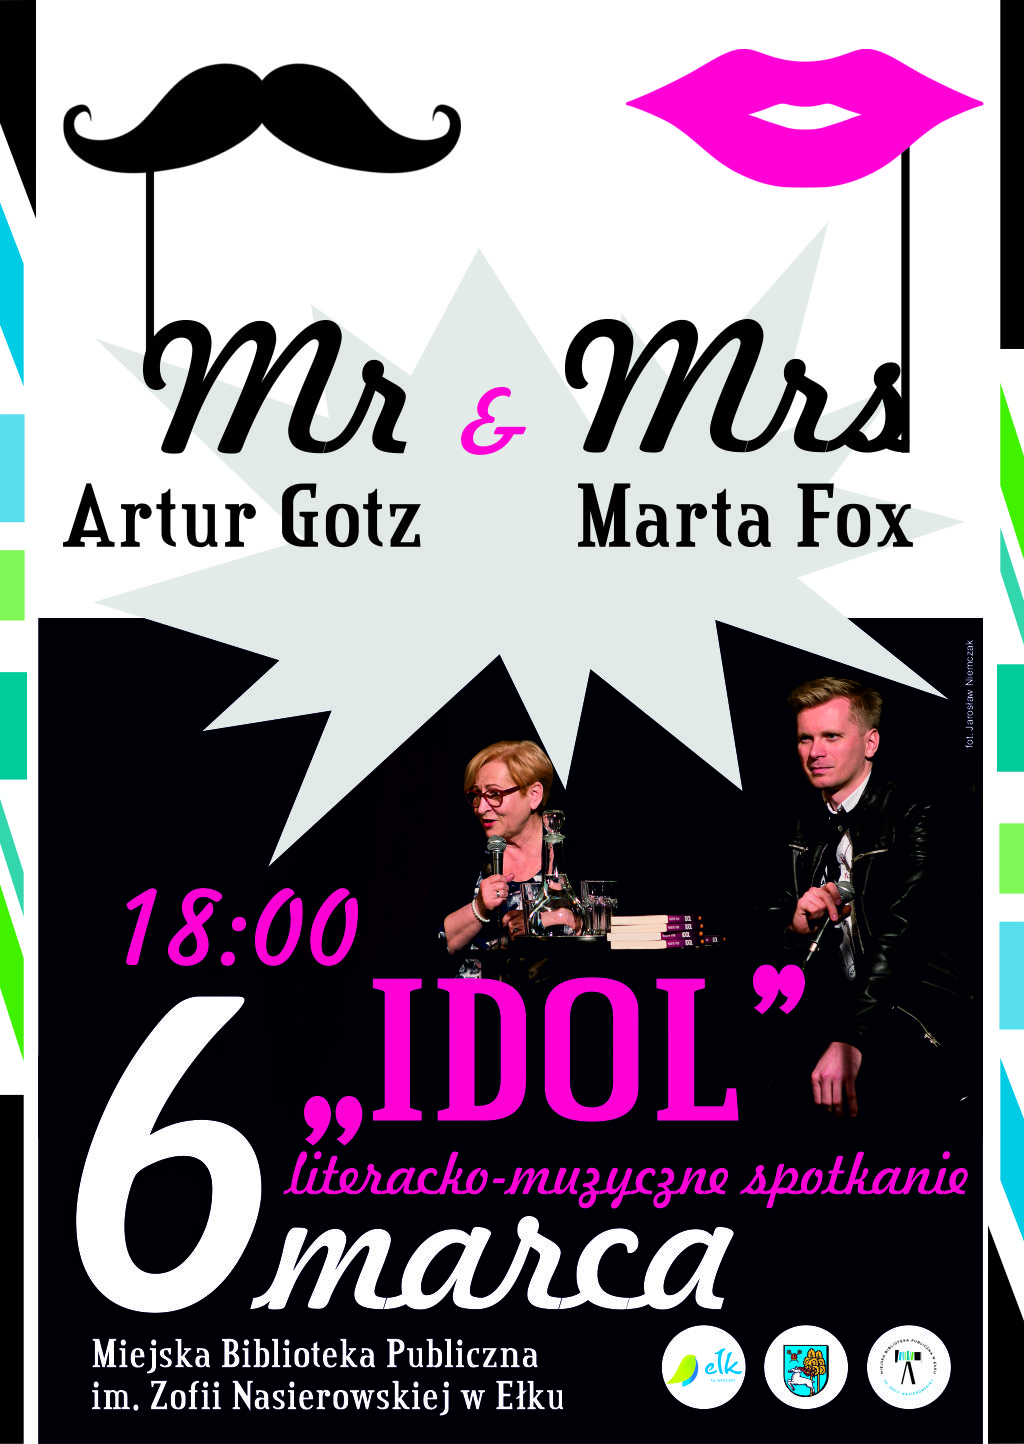 Marta Fox & Artur Gotz.jpg